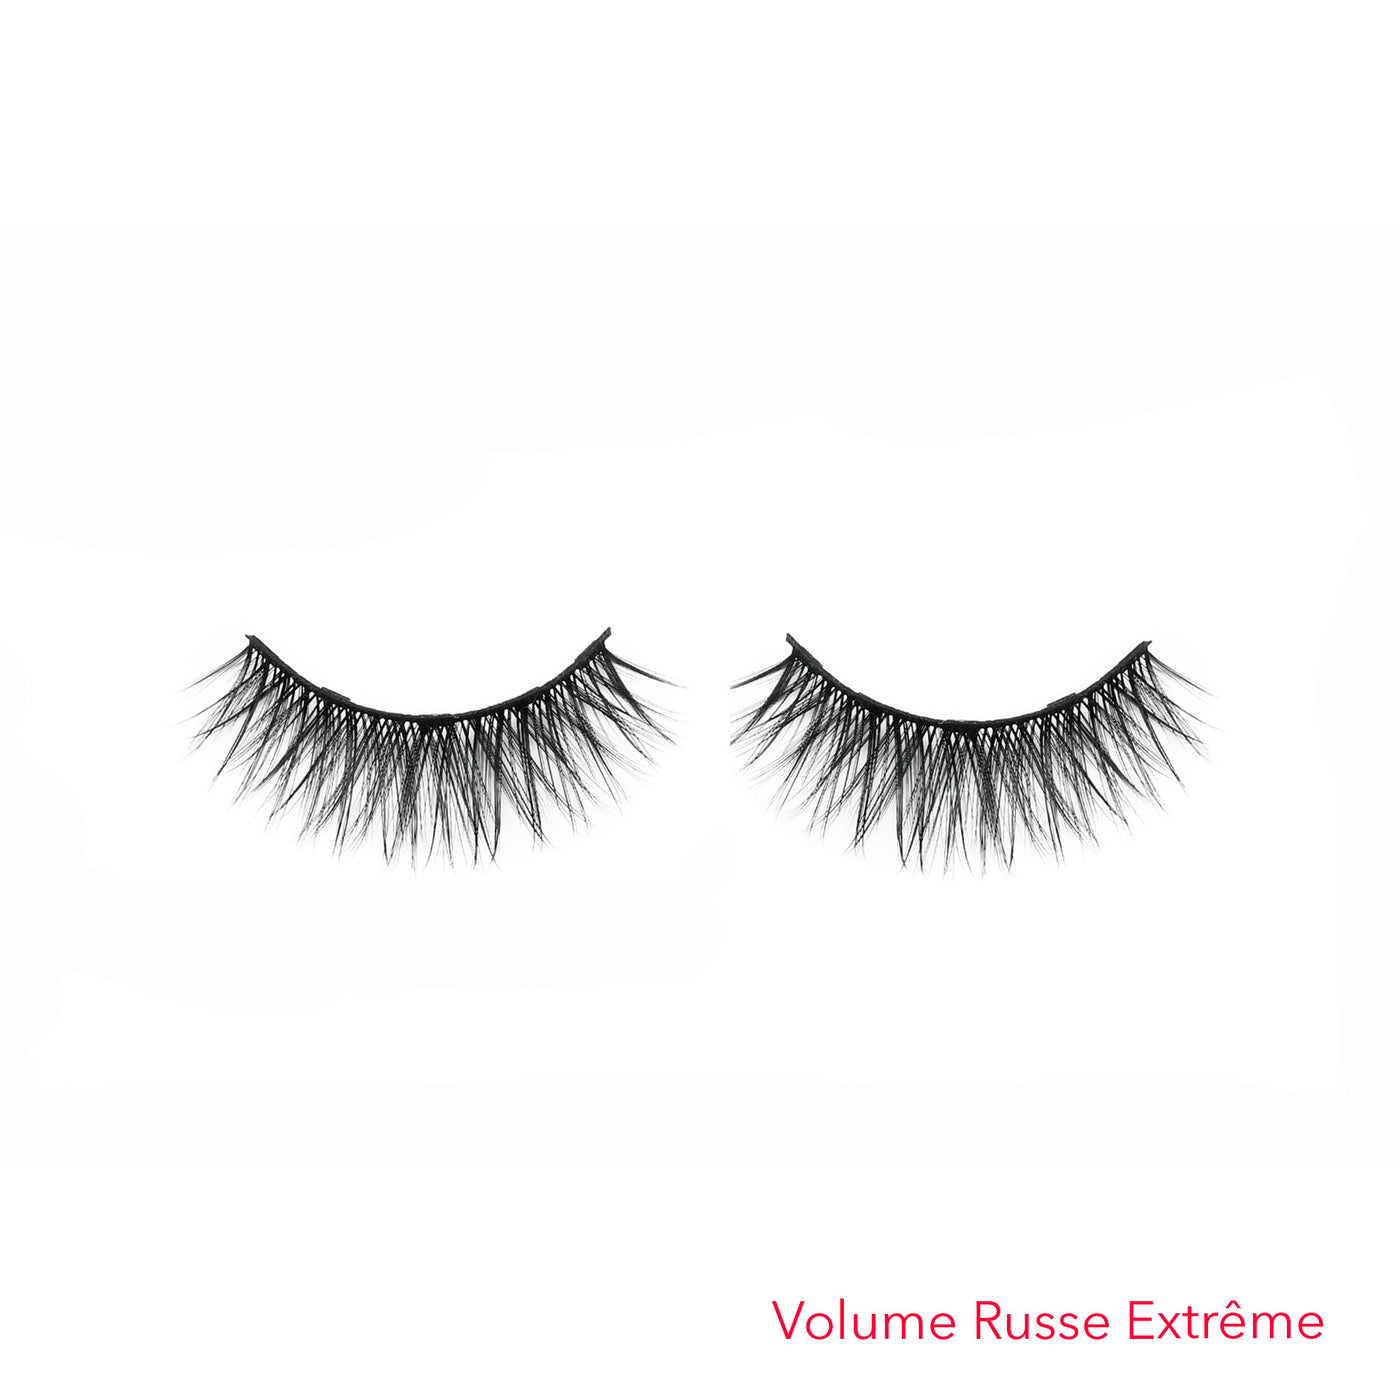 Faux cils eyeliner magnétique - Volume russe extreme double frange